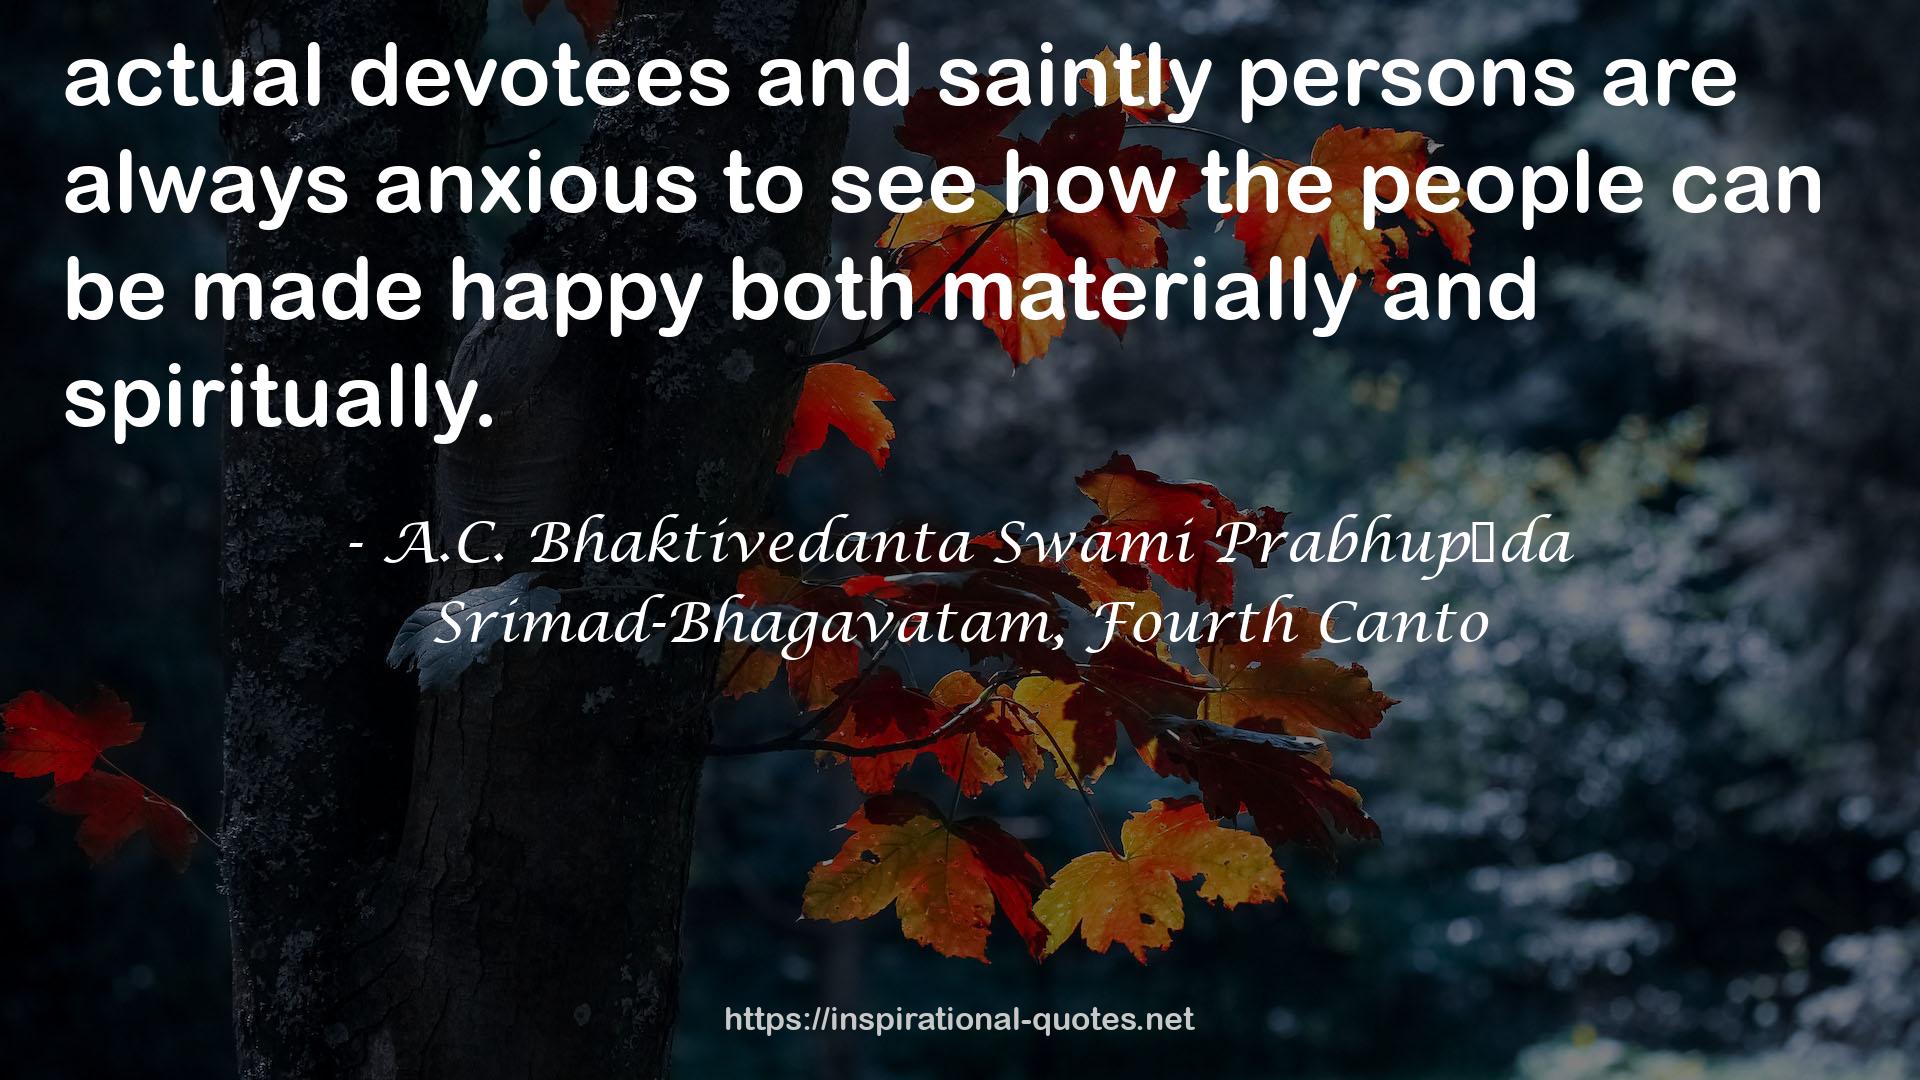 Srimad-Bhagavatam, Fourth Canto QUOTES